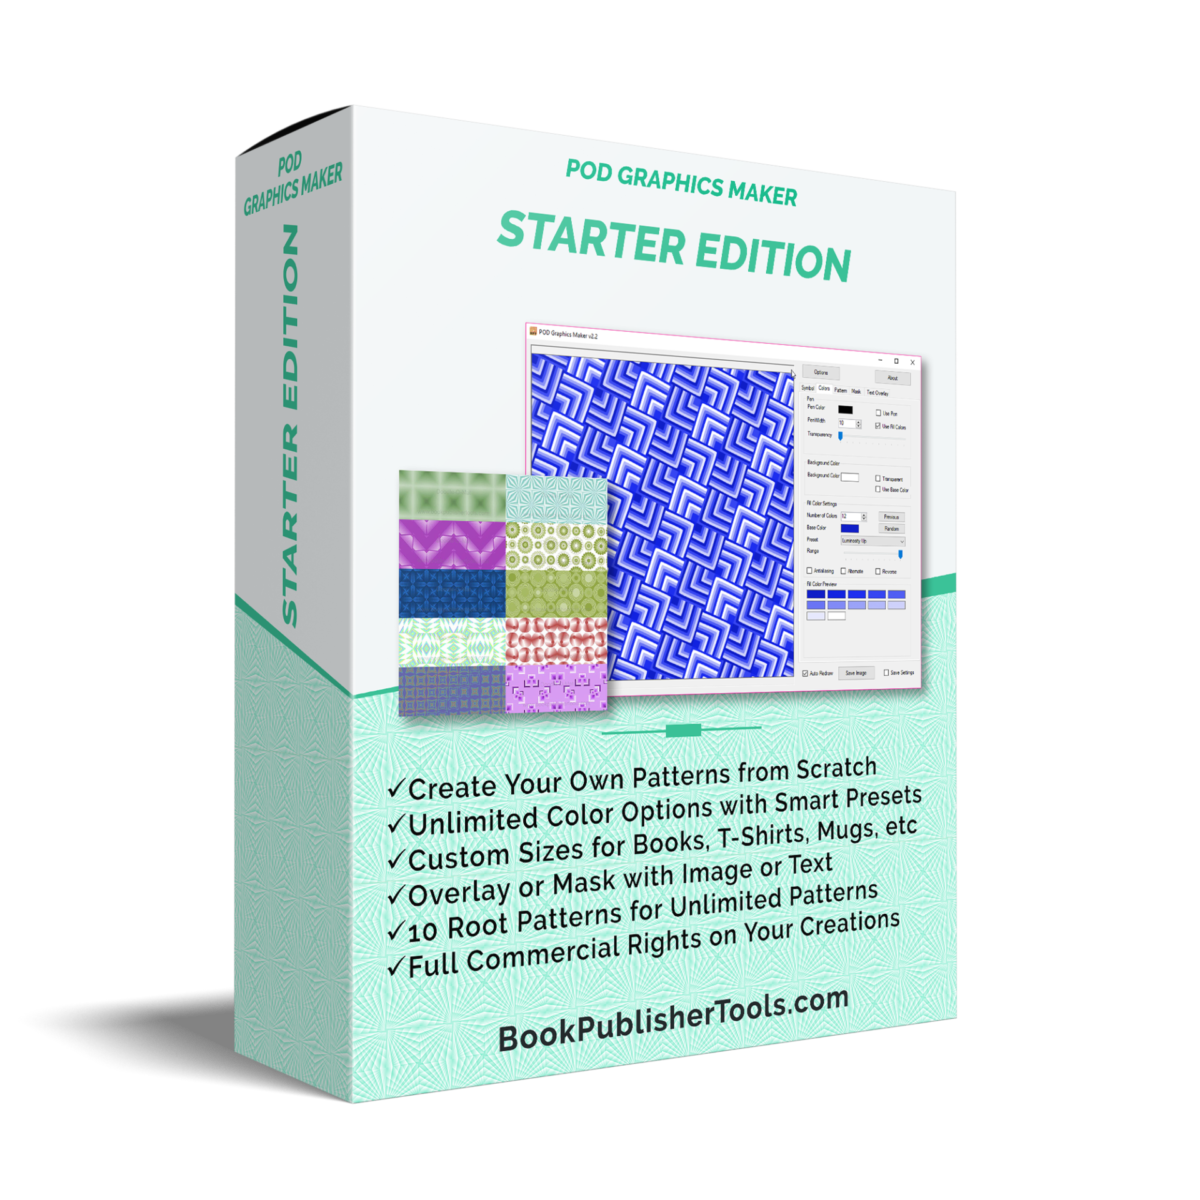 POD Graphics Maker Starter Edition software box